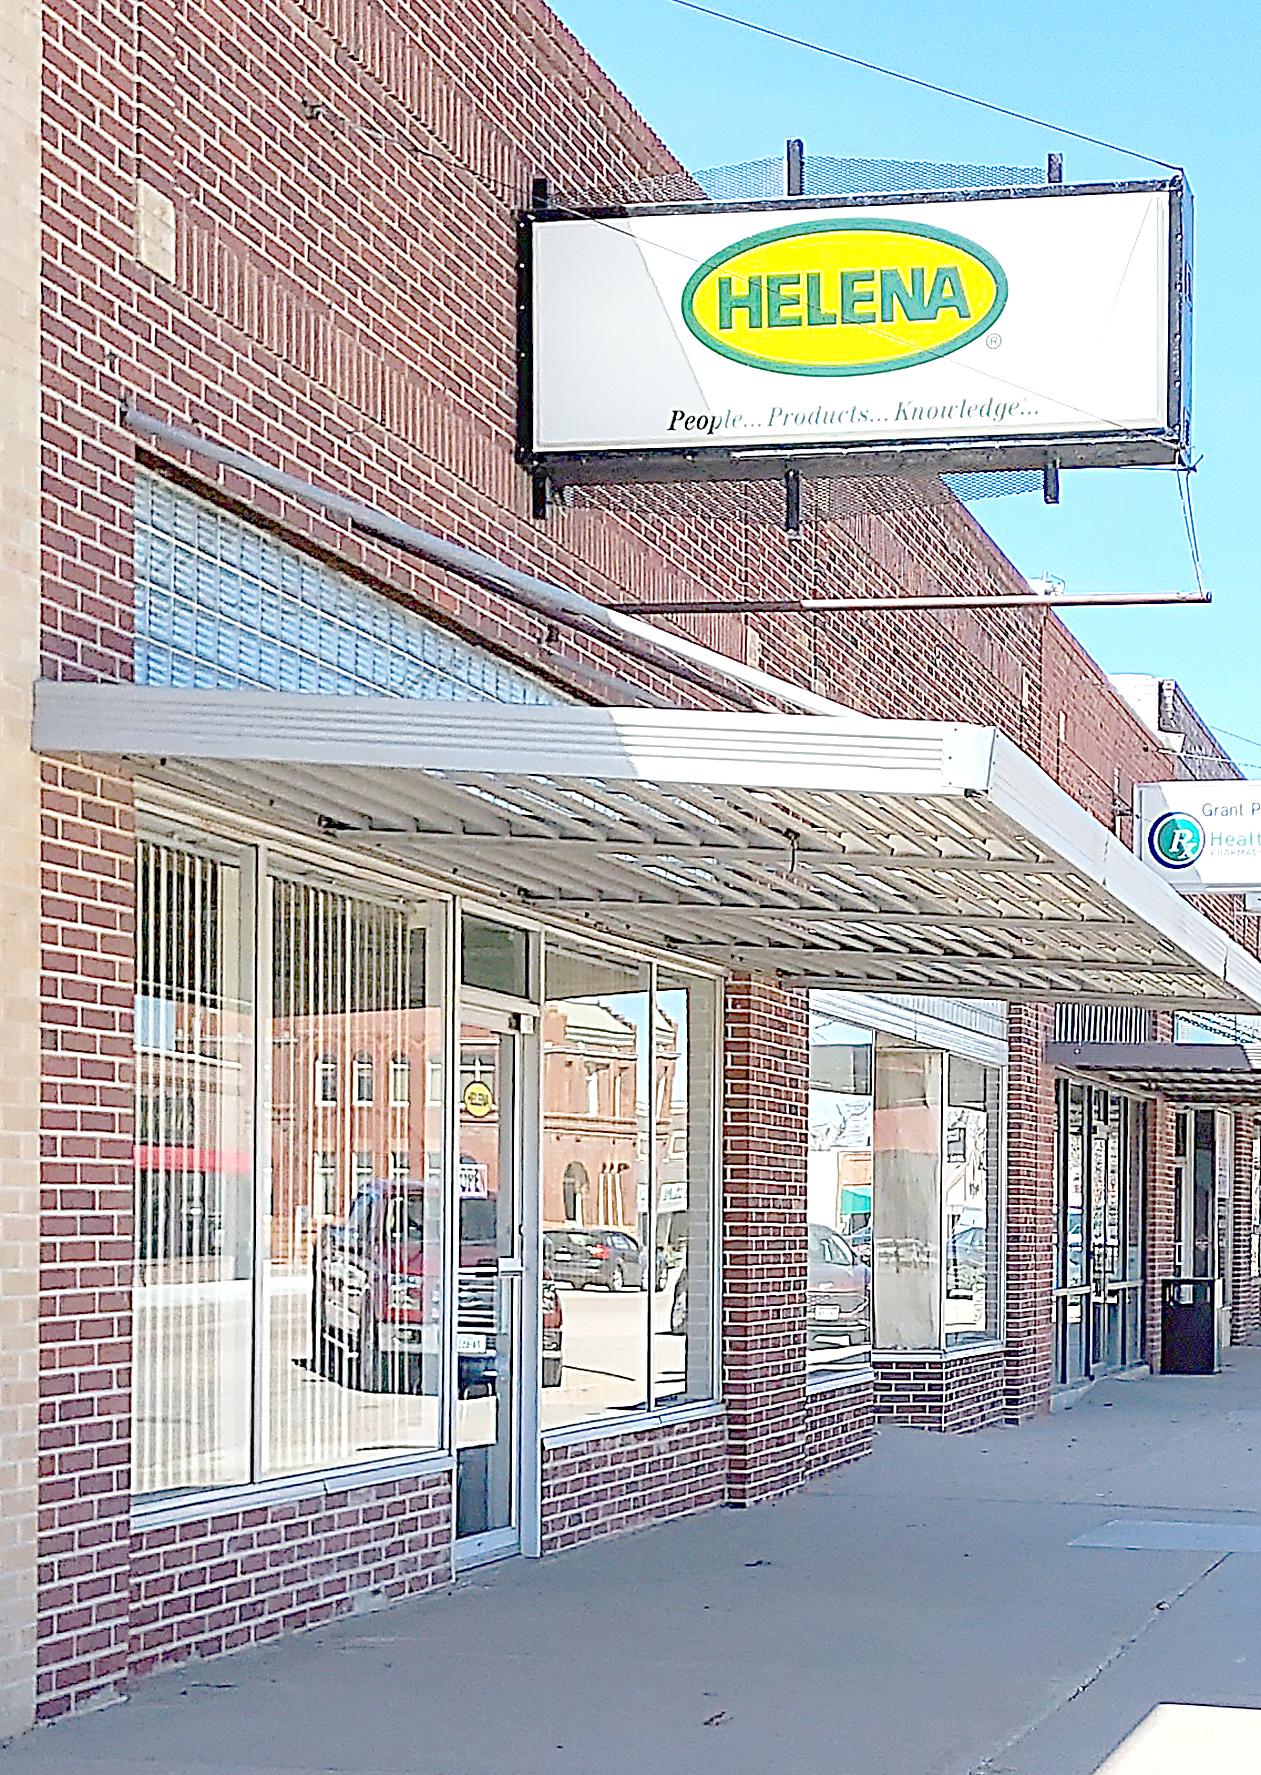 Helena Agri Enterprises Opens Location In Grant Grant Tribune